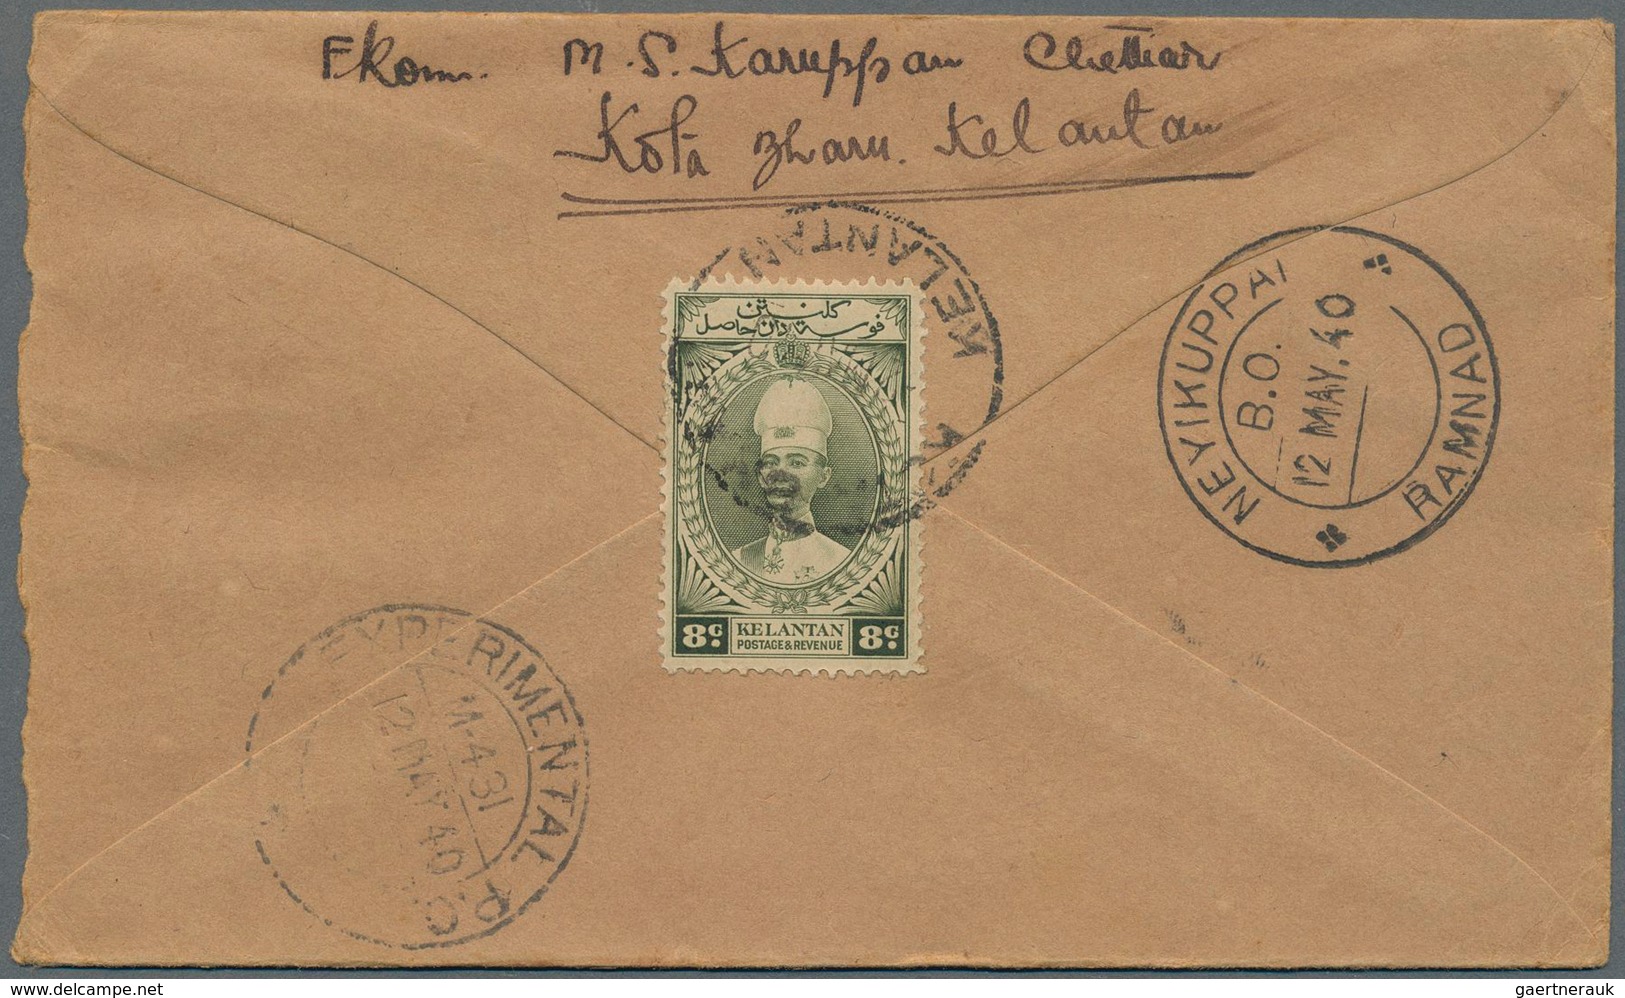 Malaiische Staaten - Kelantan: 1940, Four covers from Kota Bharu to Neyikuppai, India franked by Sul